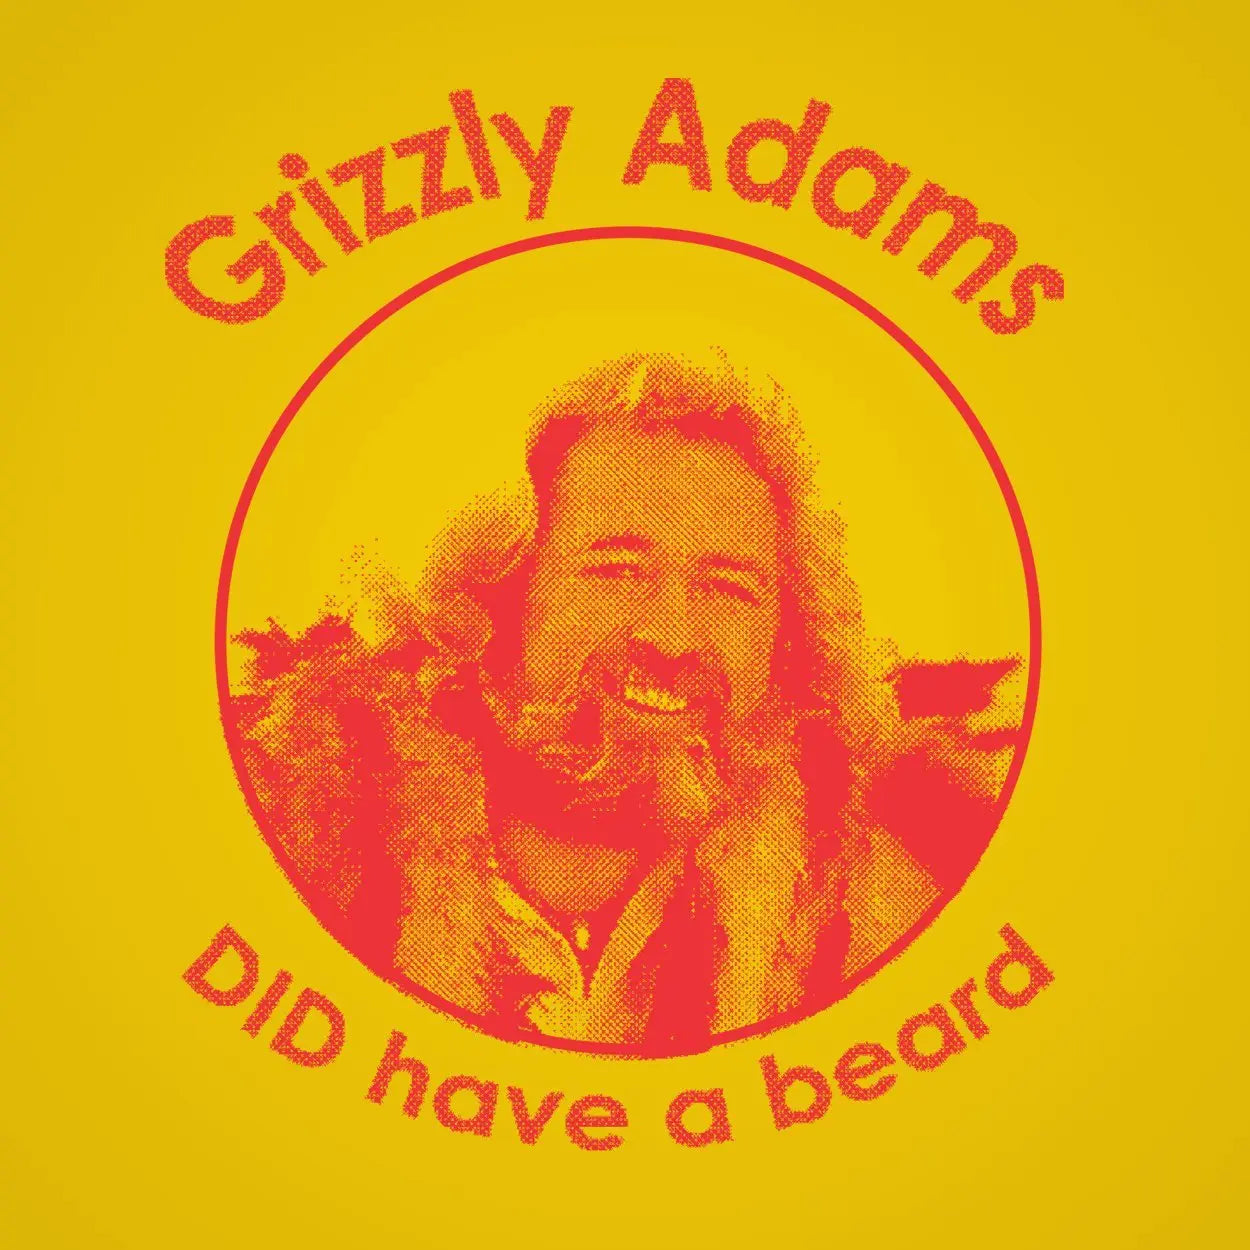 Grizzly Adams Did Have A Beard Tshirt - Donkey Tees